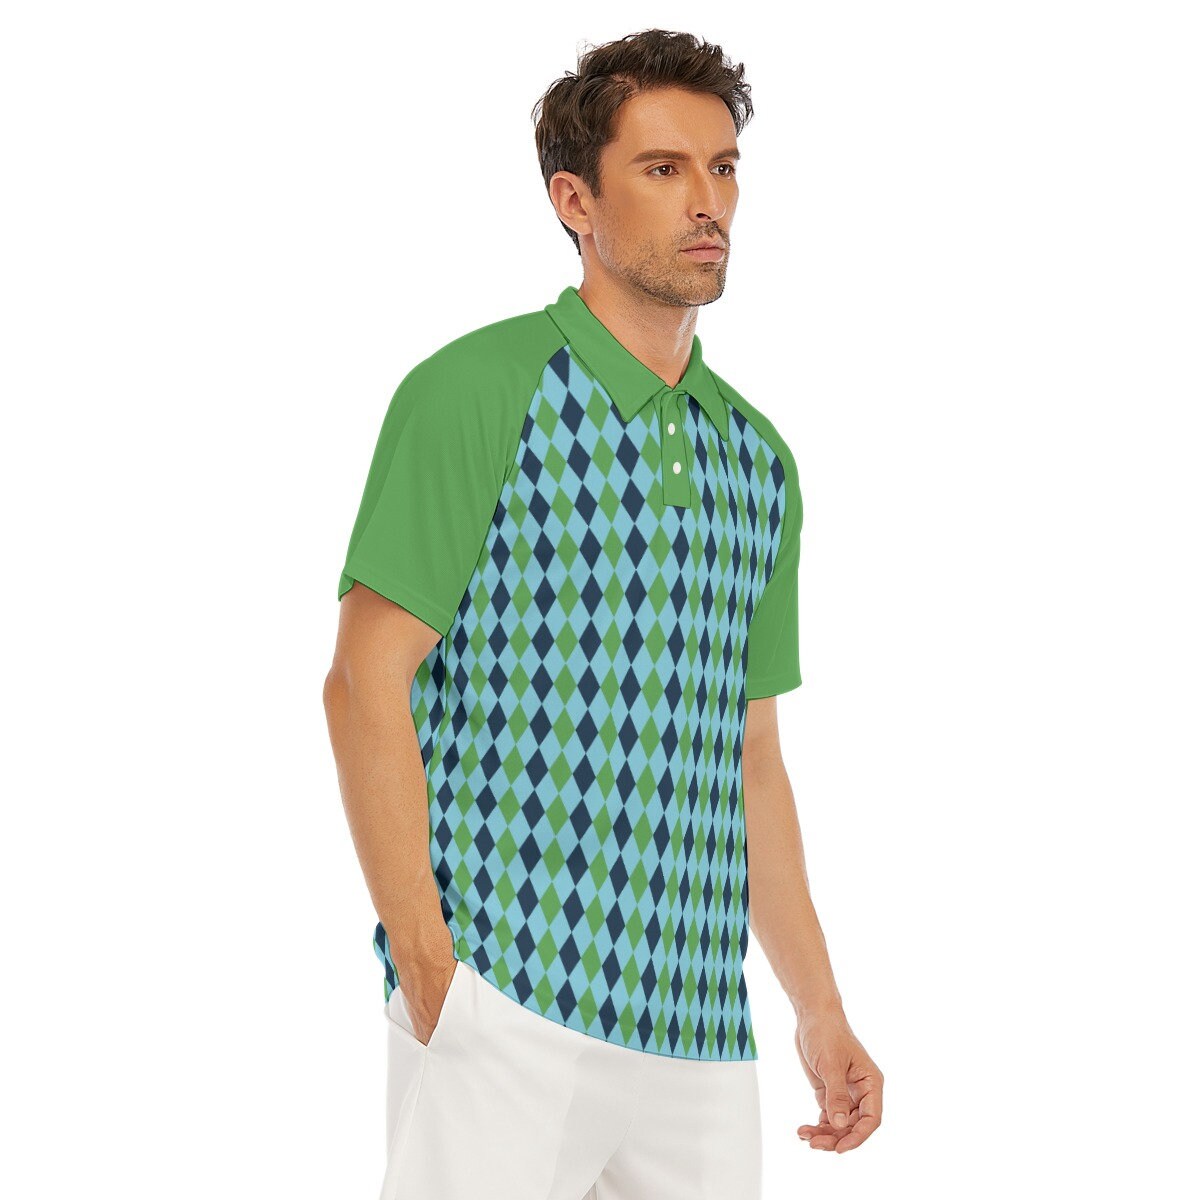 Polo Shirt, Men's Polo Shirt, Vintage Polo, Retro Polo Shirt, 60s Tops men, Green Blue Geometric Shirt, Men's Vintage Shirt, Men's Knit Top